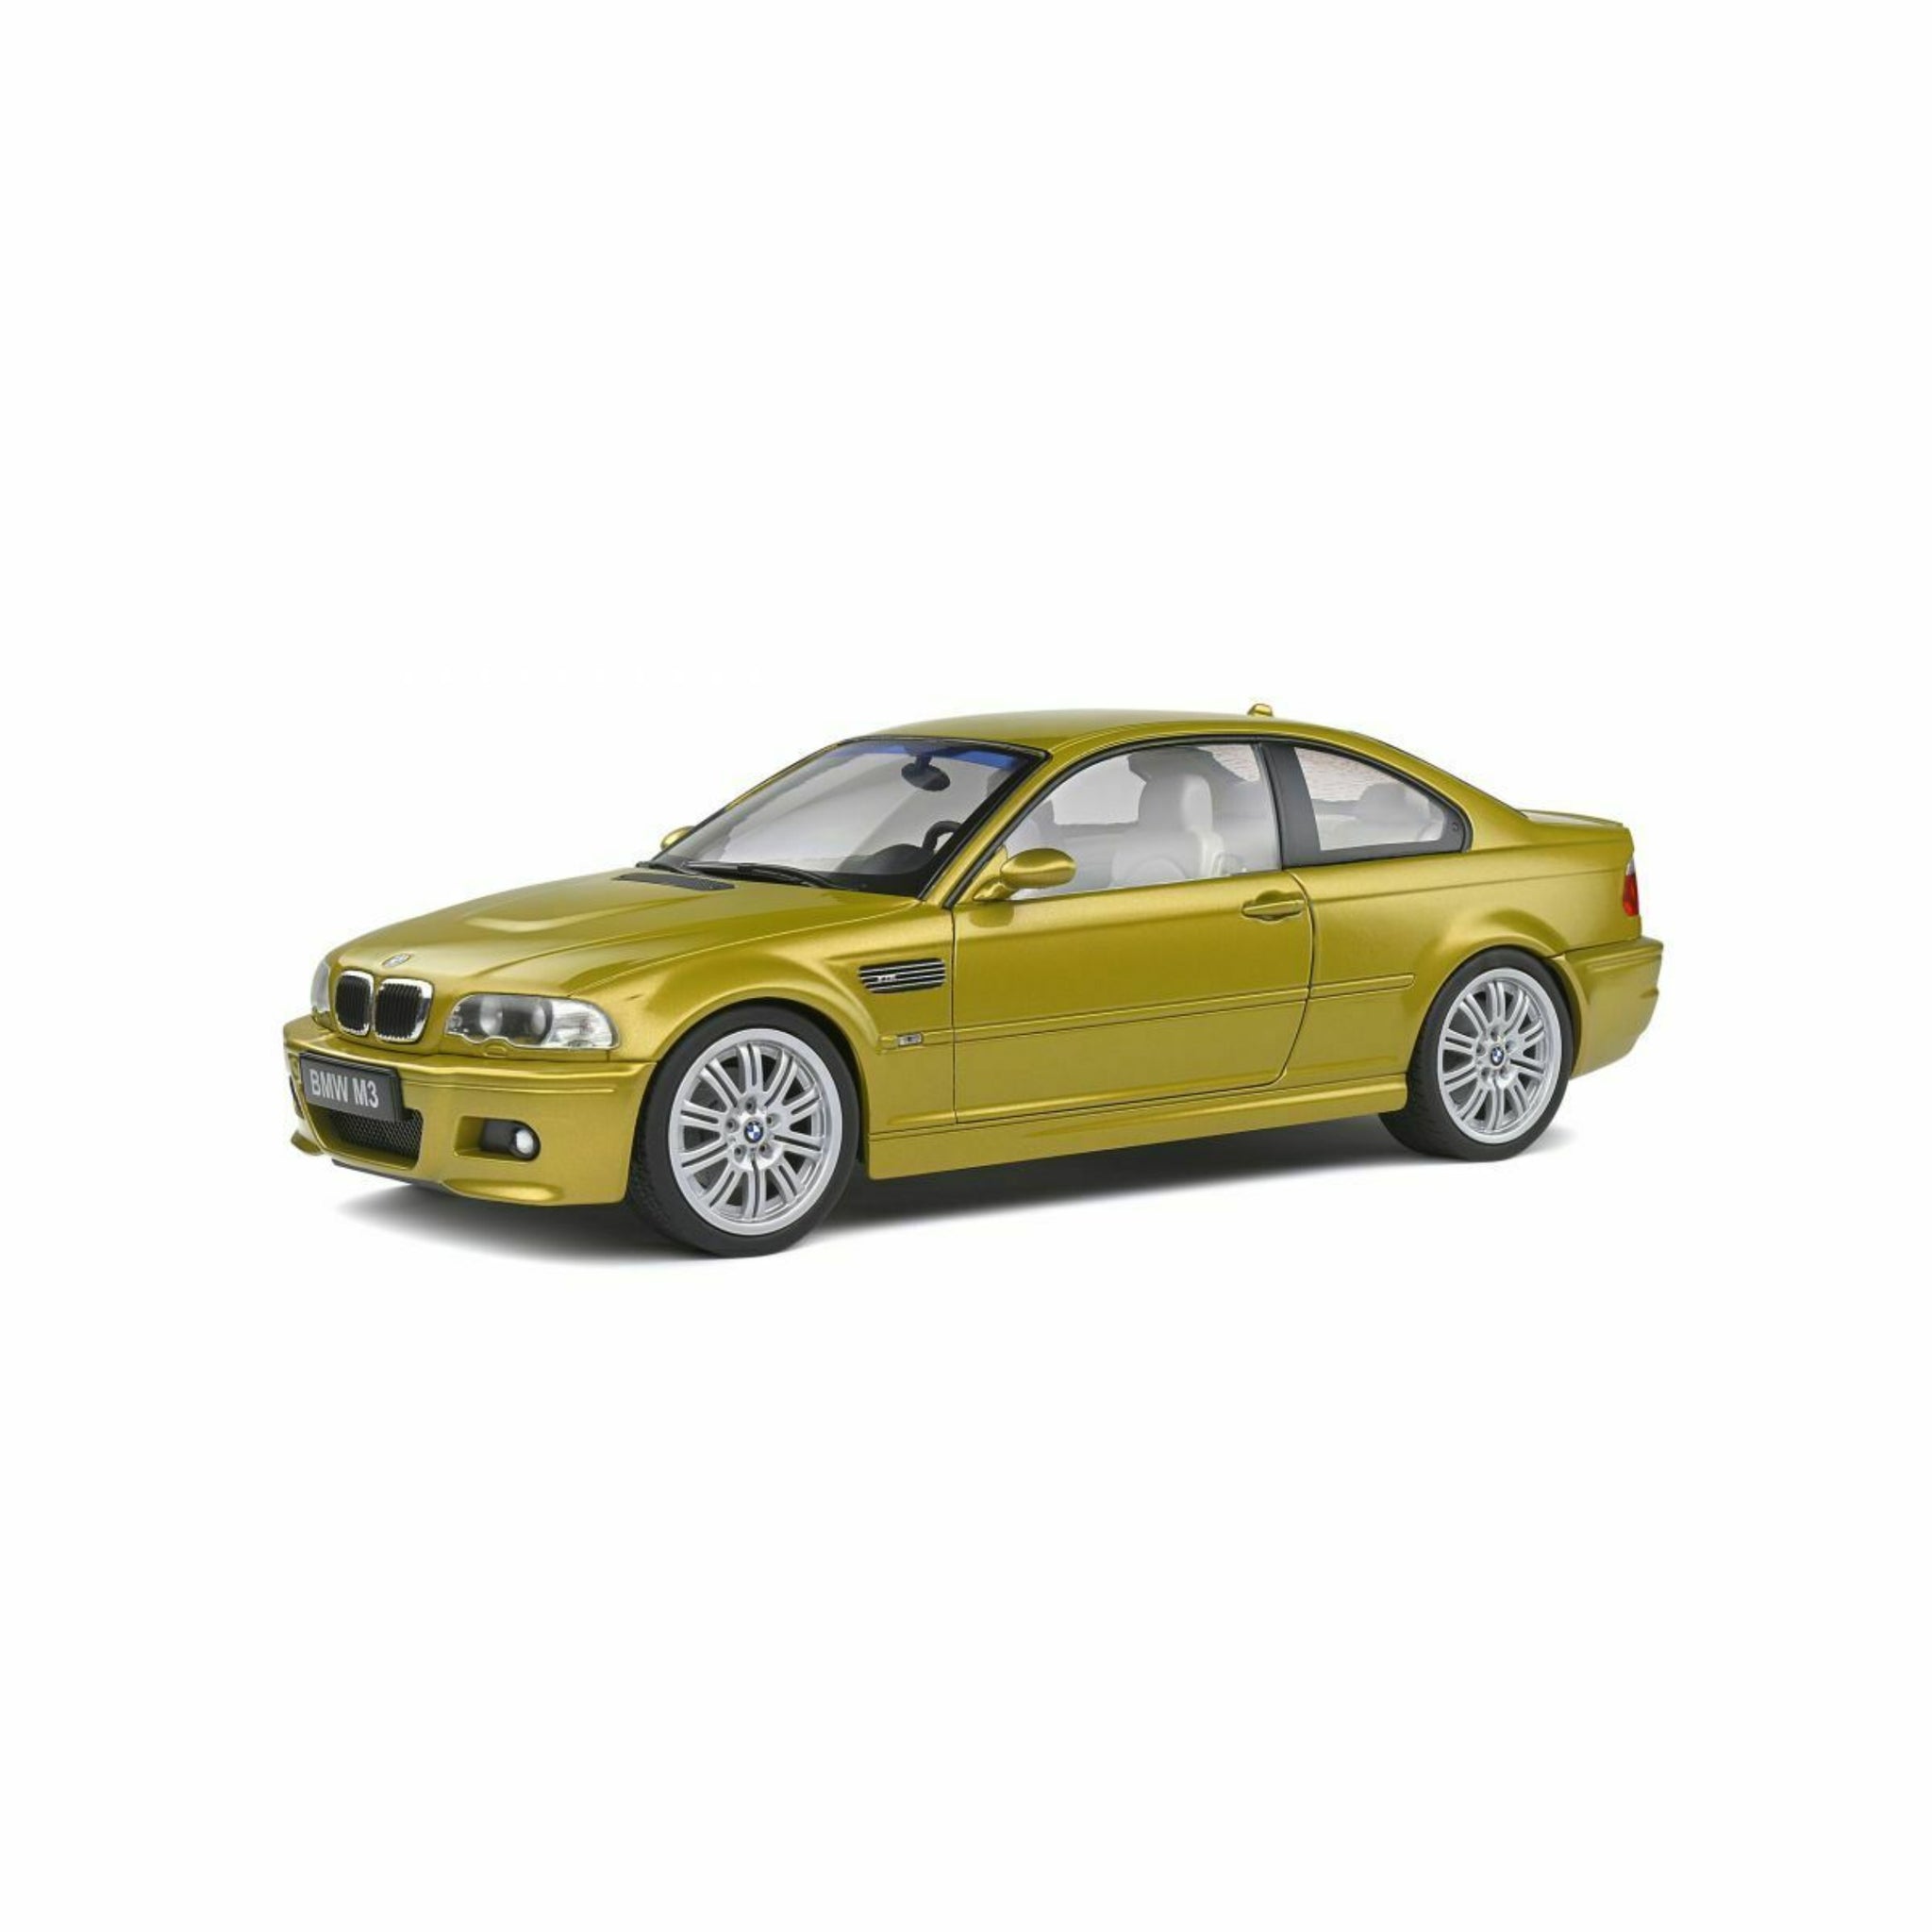 MINIATURE BMW E46 M3 – Parkview BMW Lifestyle